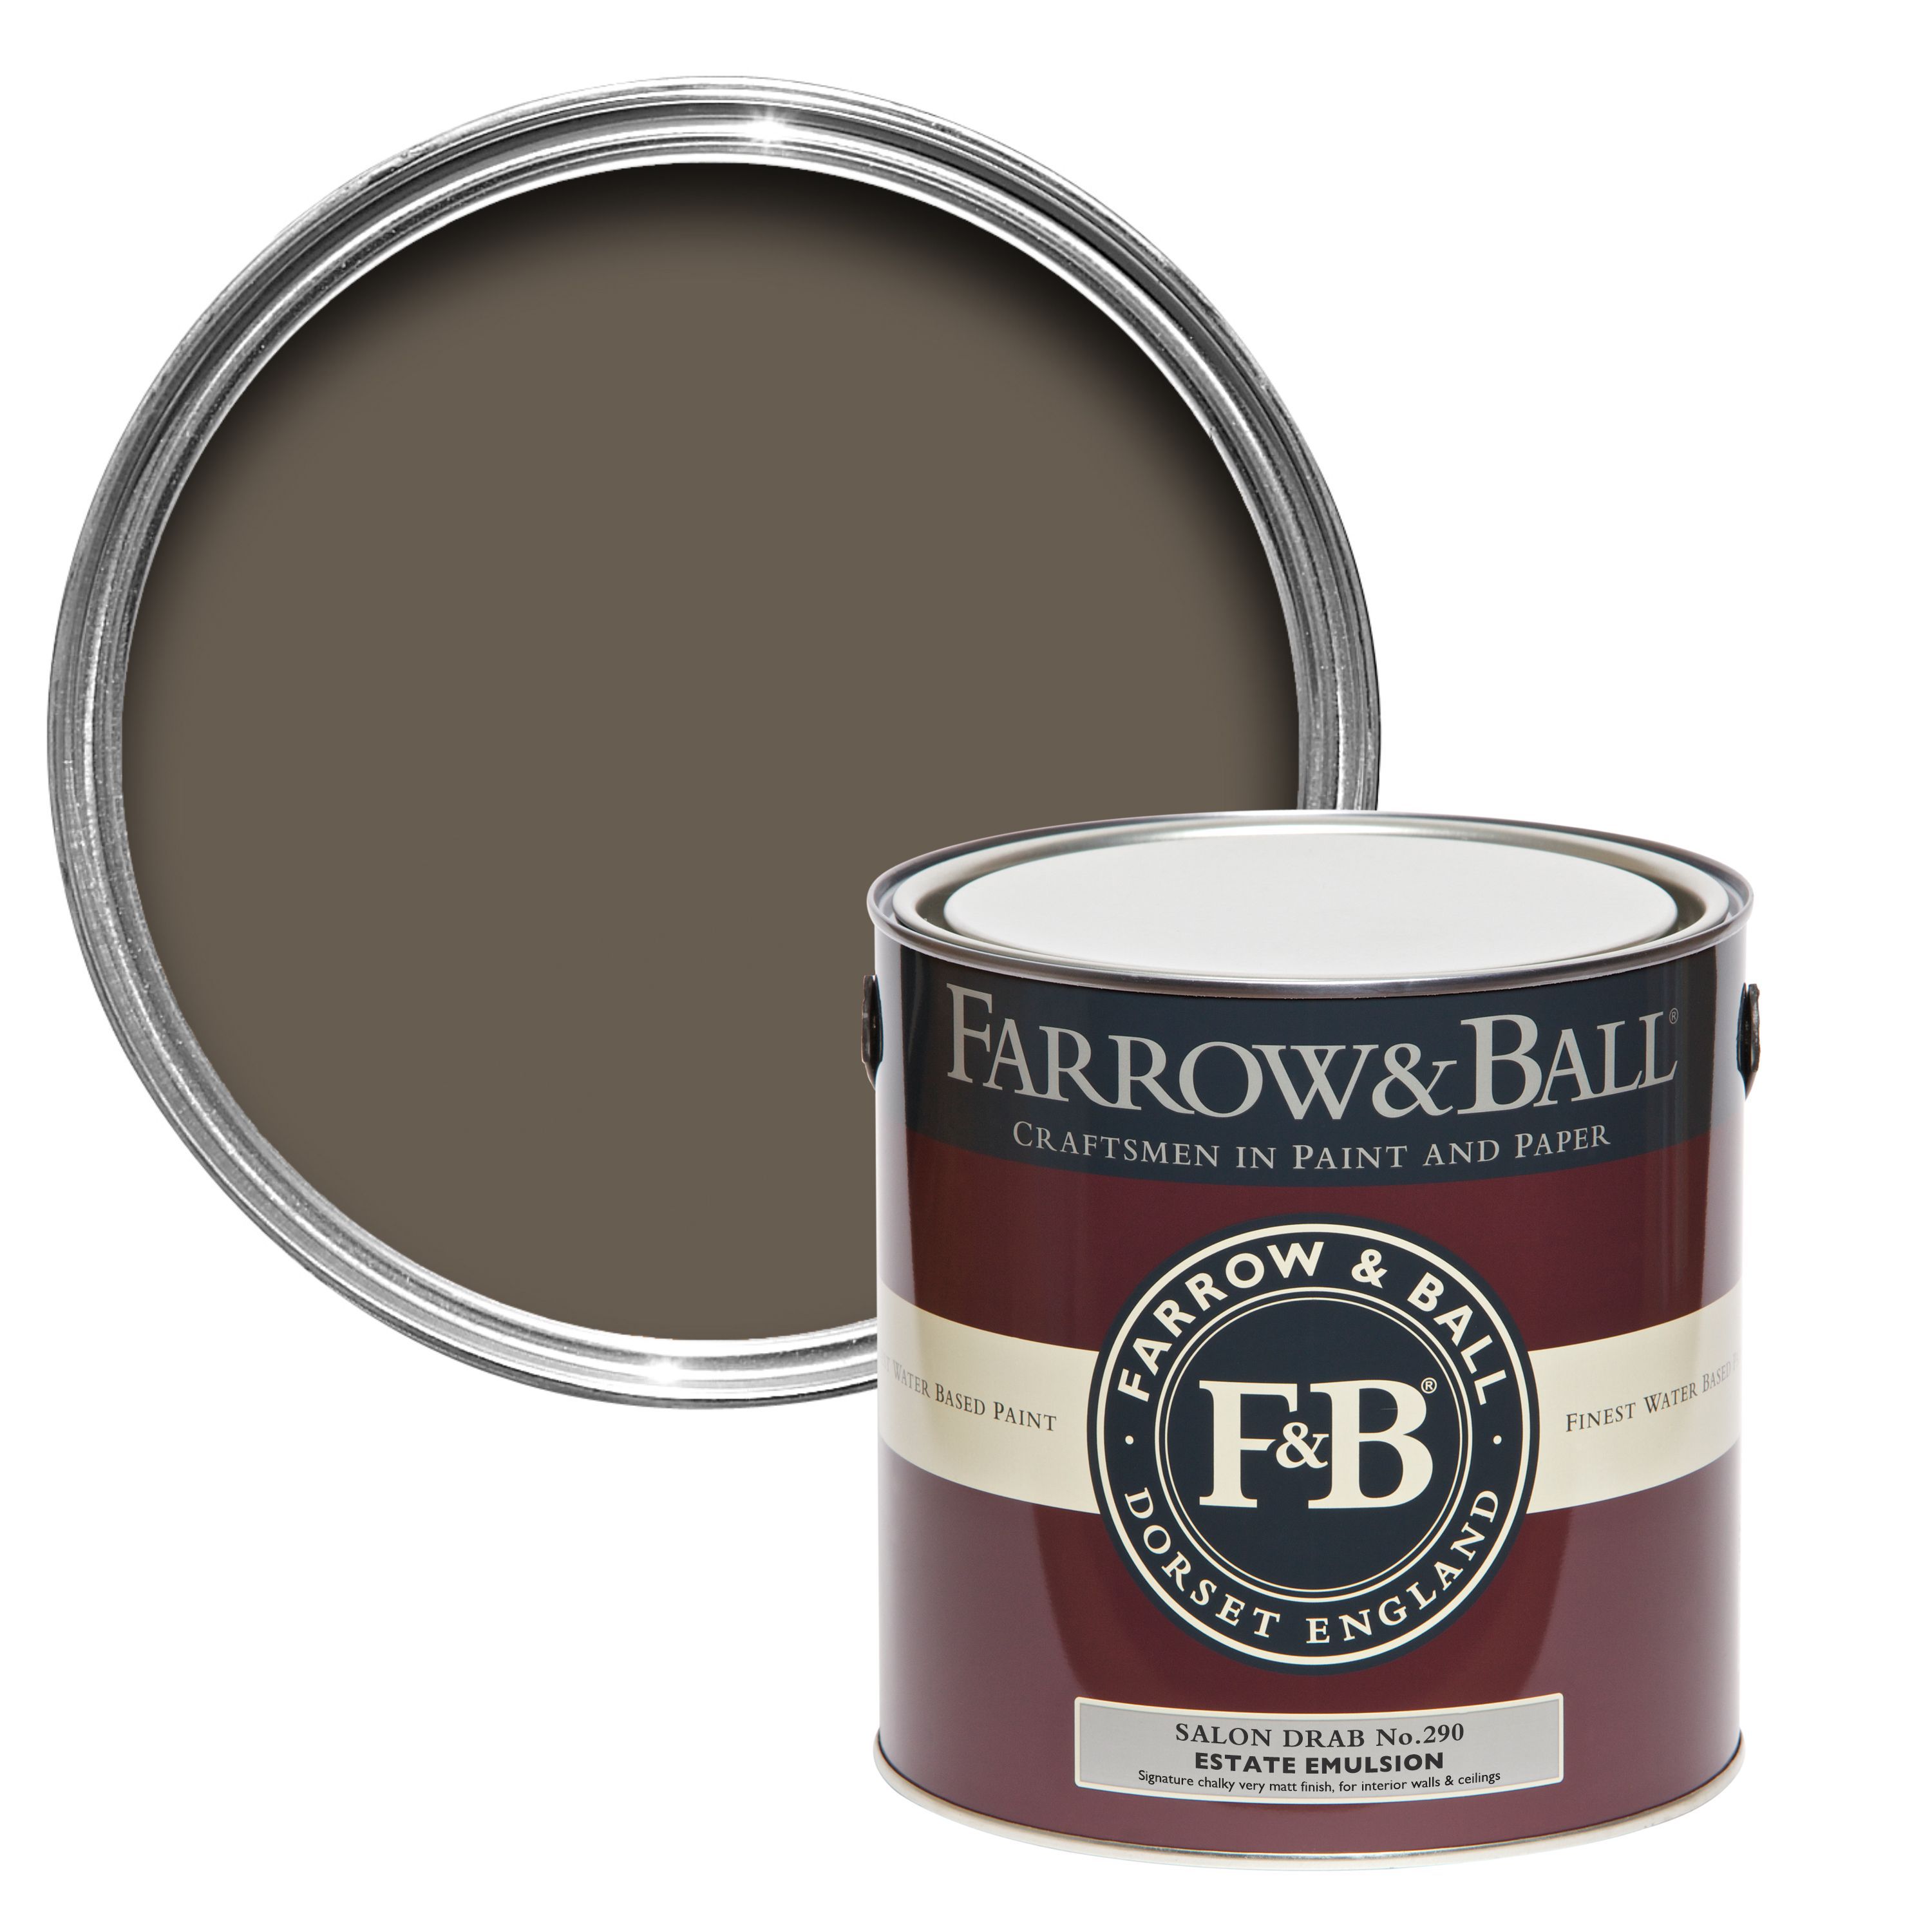 Farrow & Ball Estate Salon drab No.290 Matt Emulsion paint, 2.5L